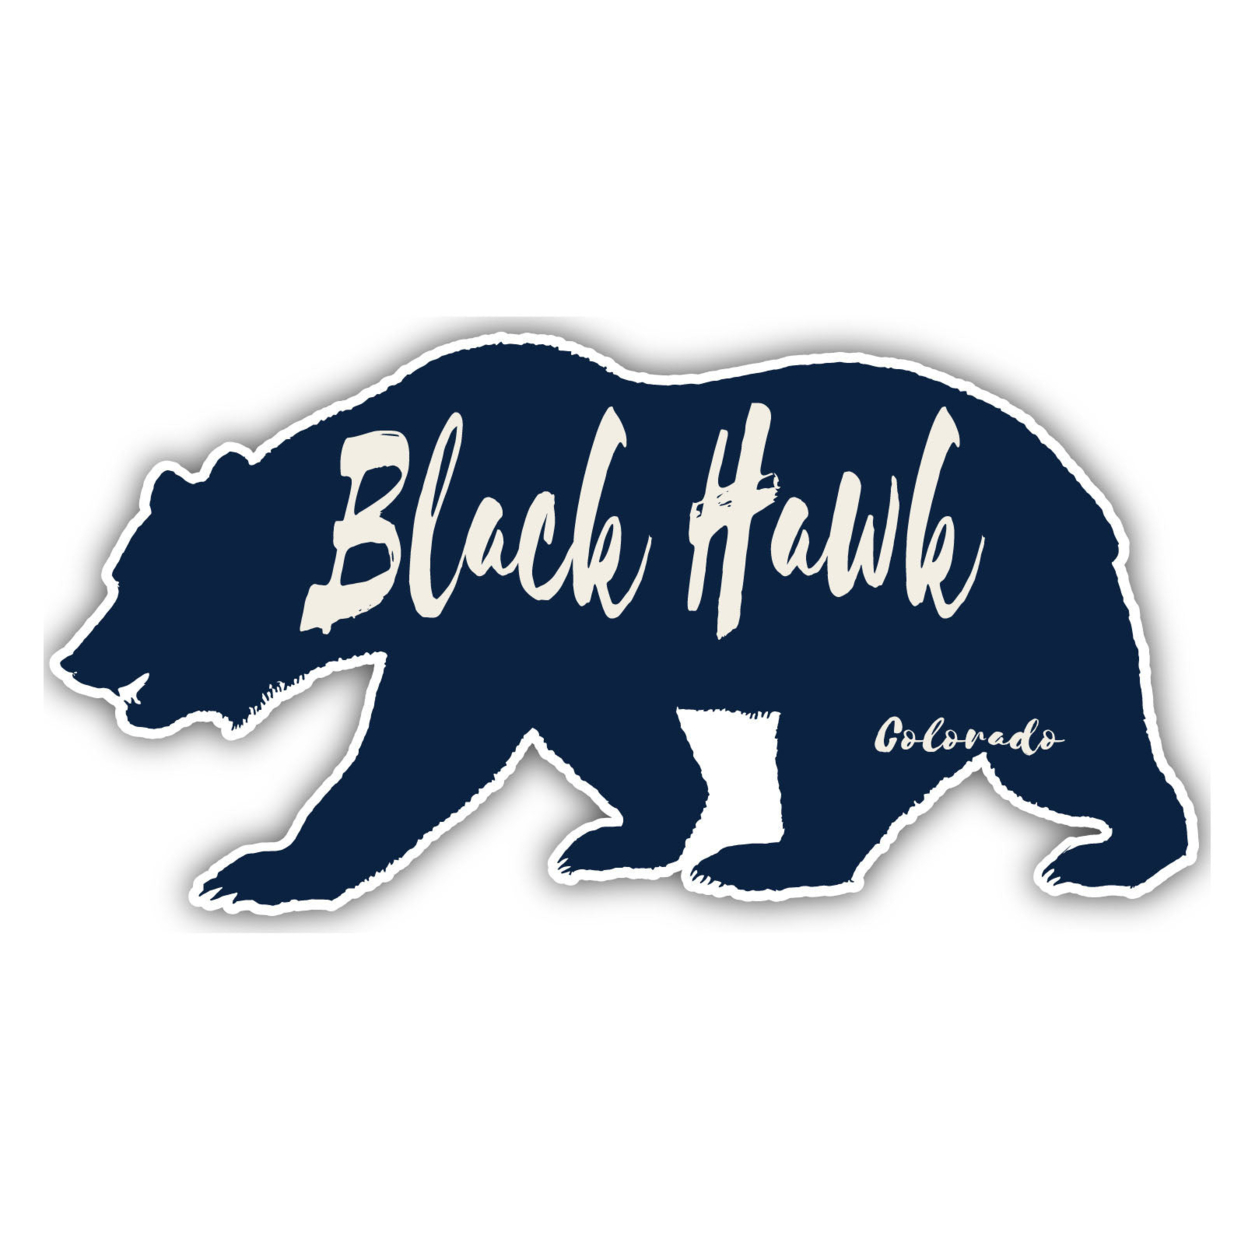 Black Hawk Colorado Souvenir Decorative Stickers (Choose Theme And Size) - 4-Pack, 6-Inch, Tent